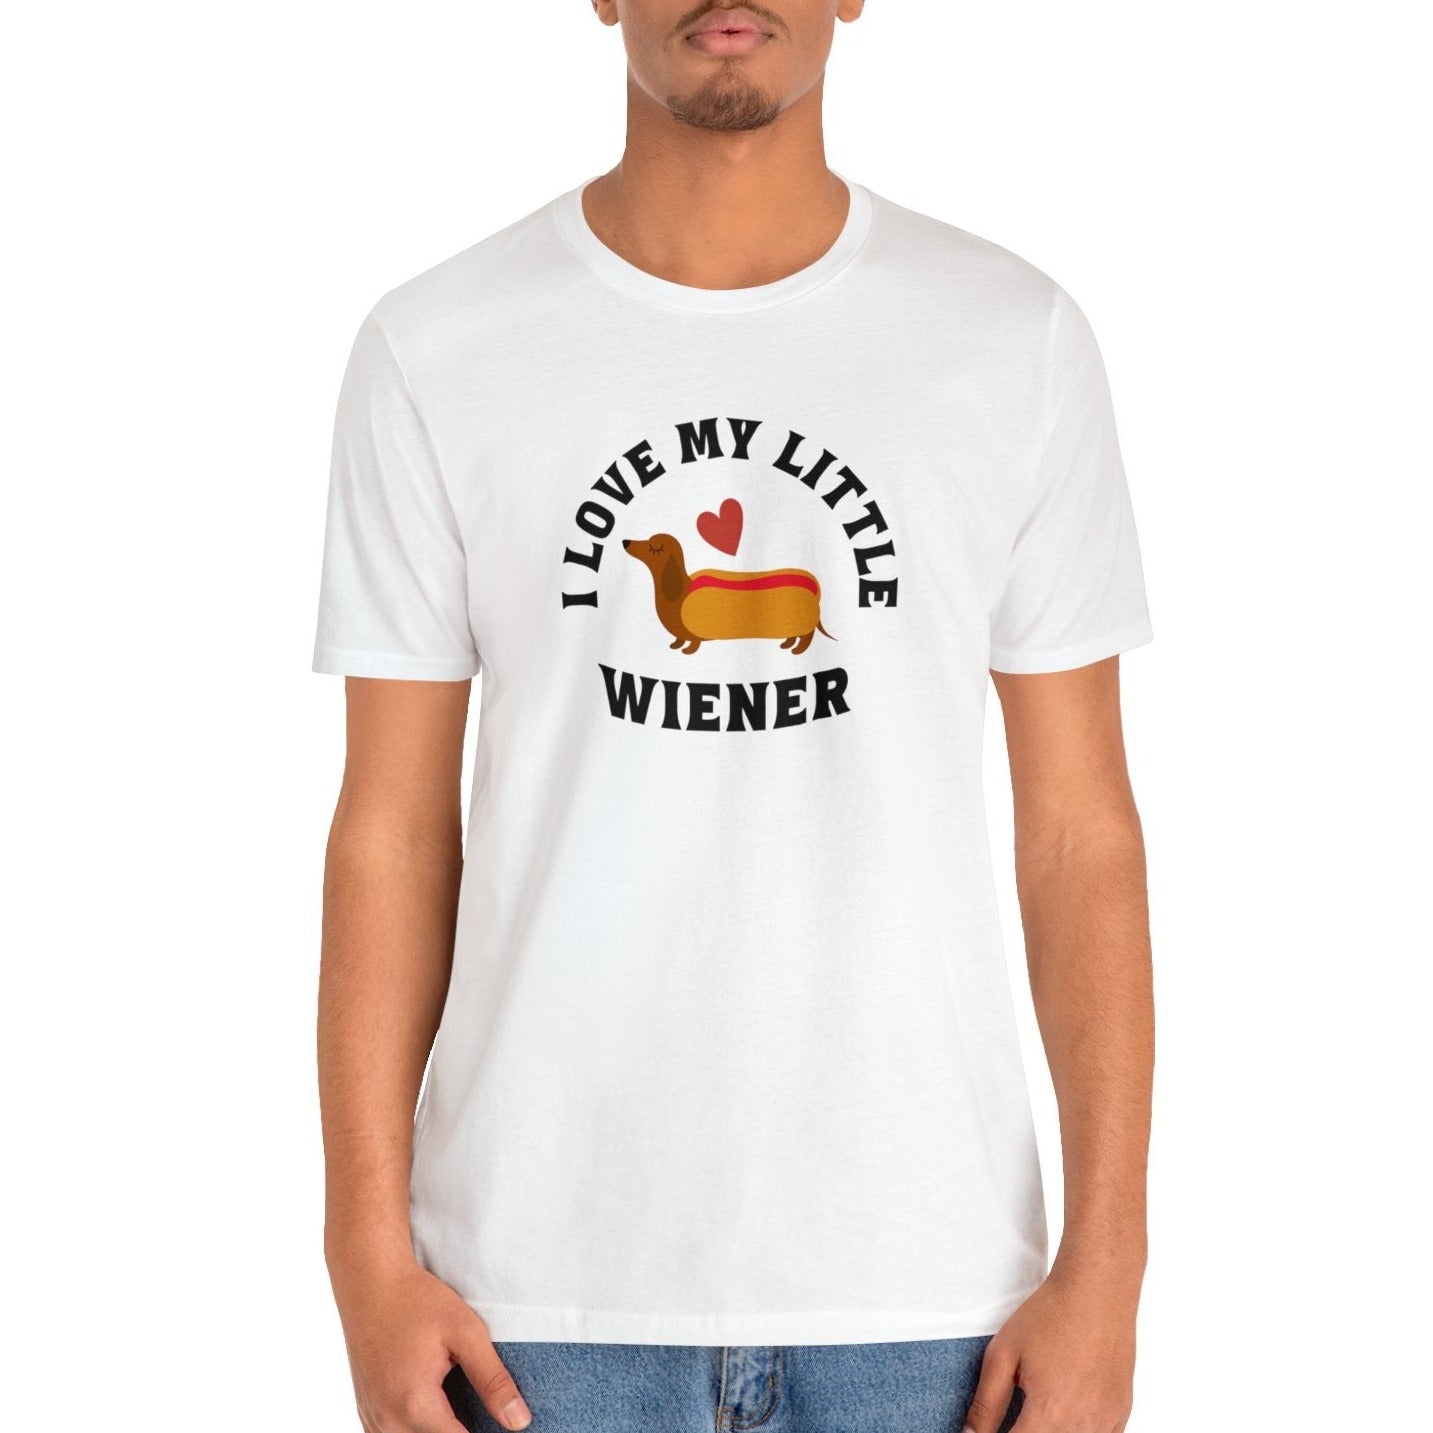 Dachshund Dog Funny Shirt - I Love My Little Wiener Shirt